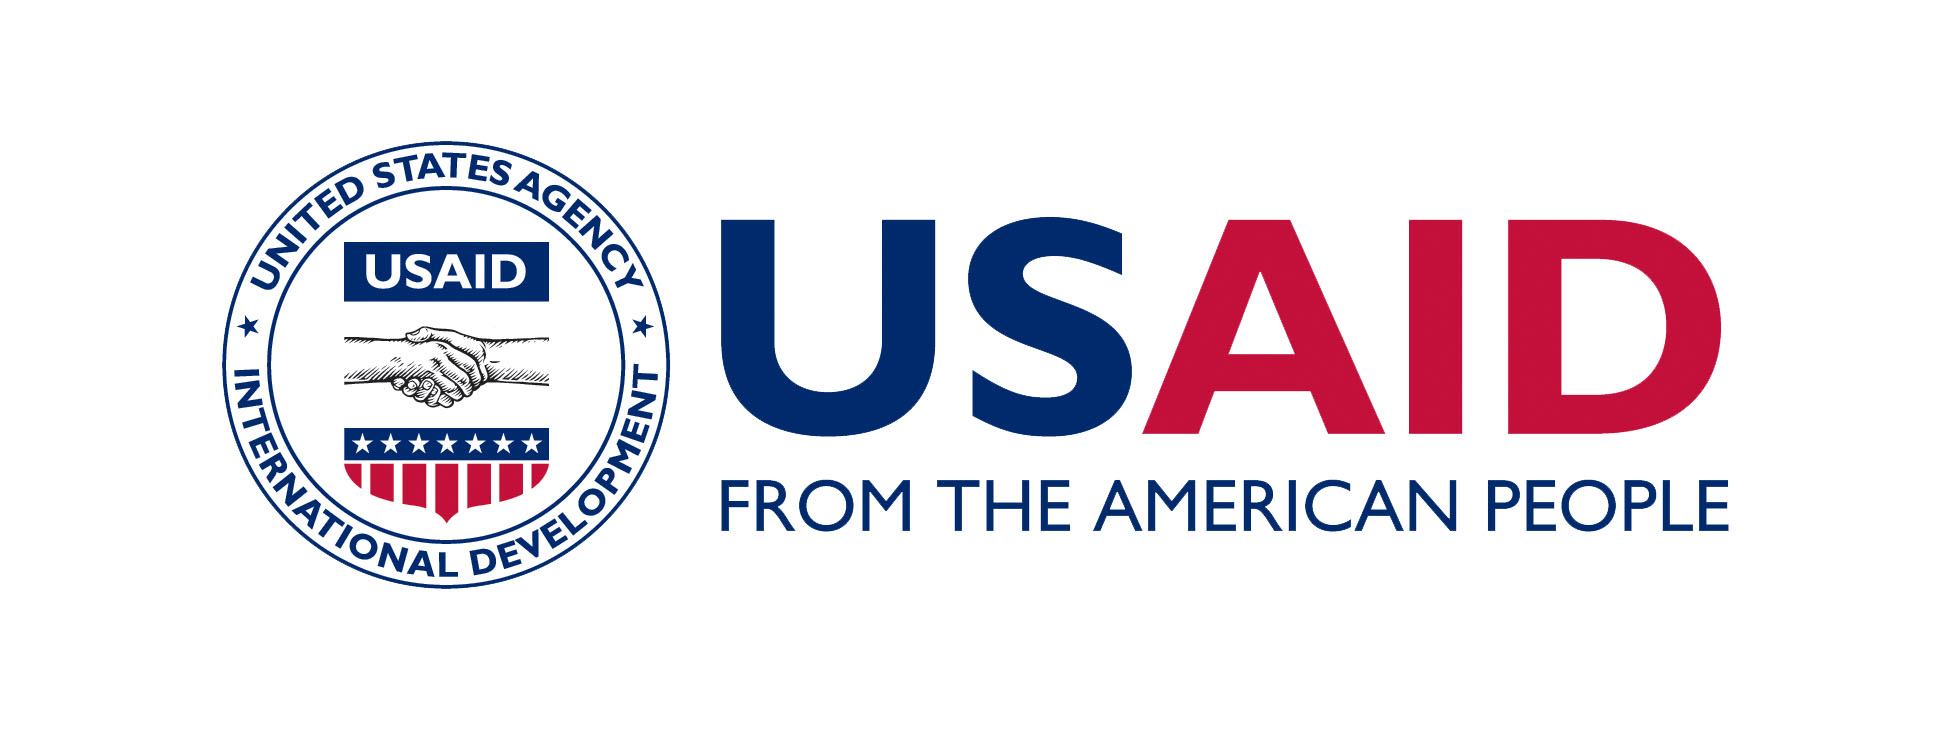 United States Agency for International Development (USAID